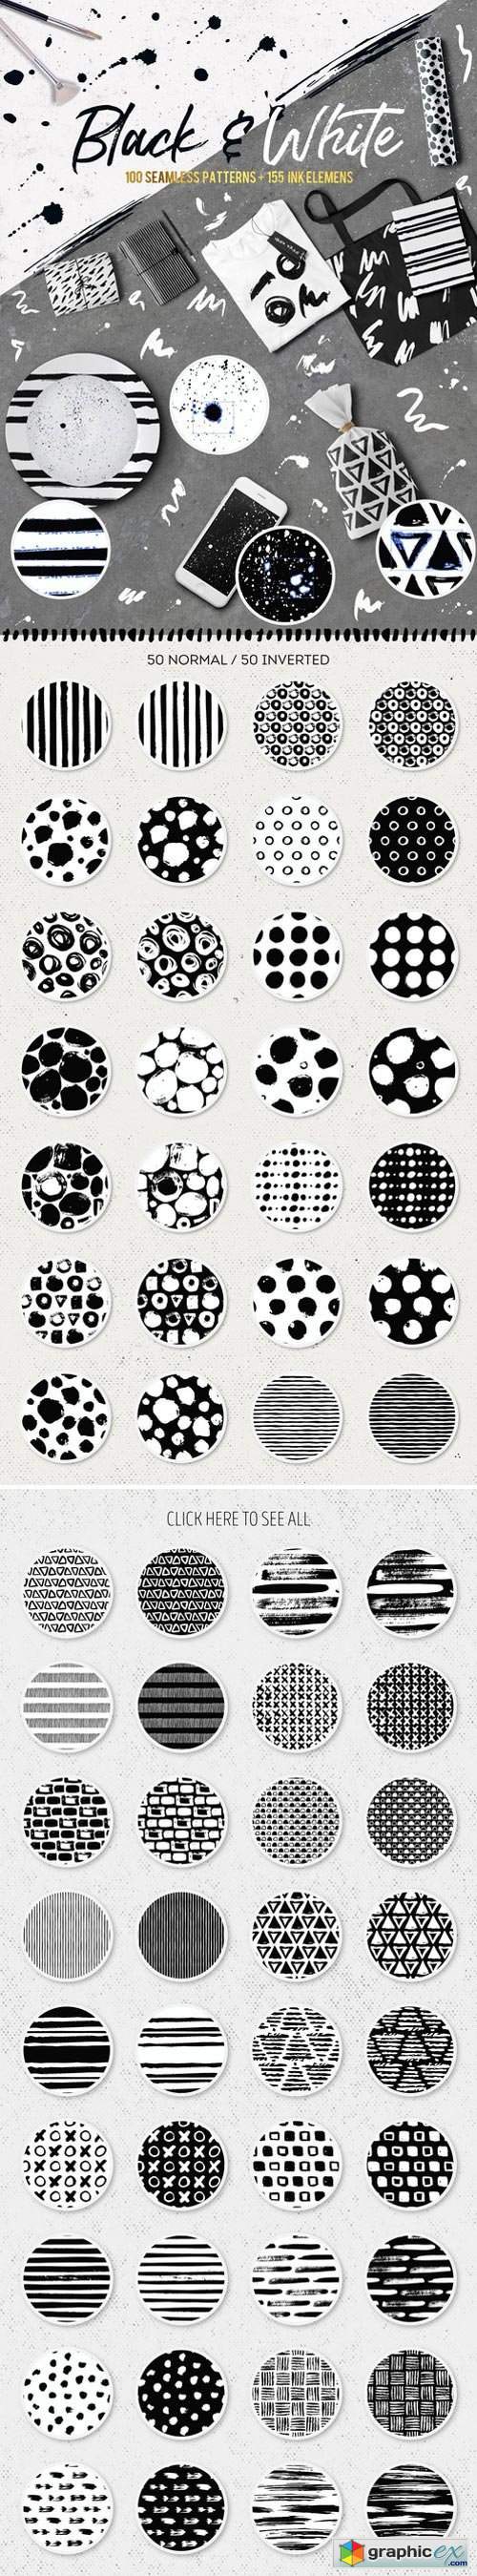 Black&White patterns + ink elements